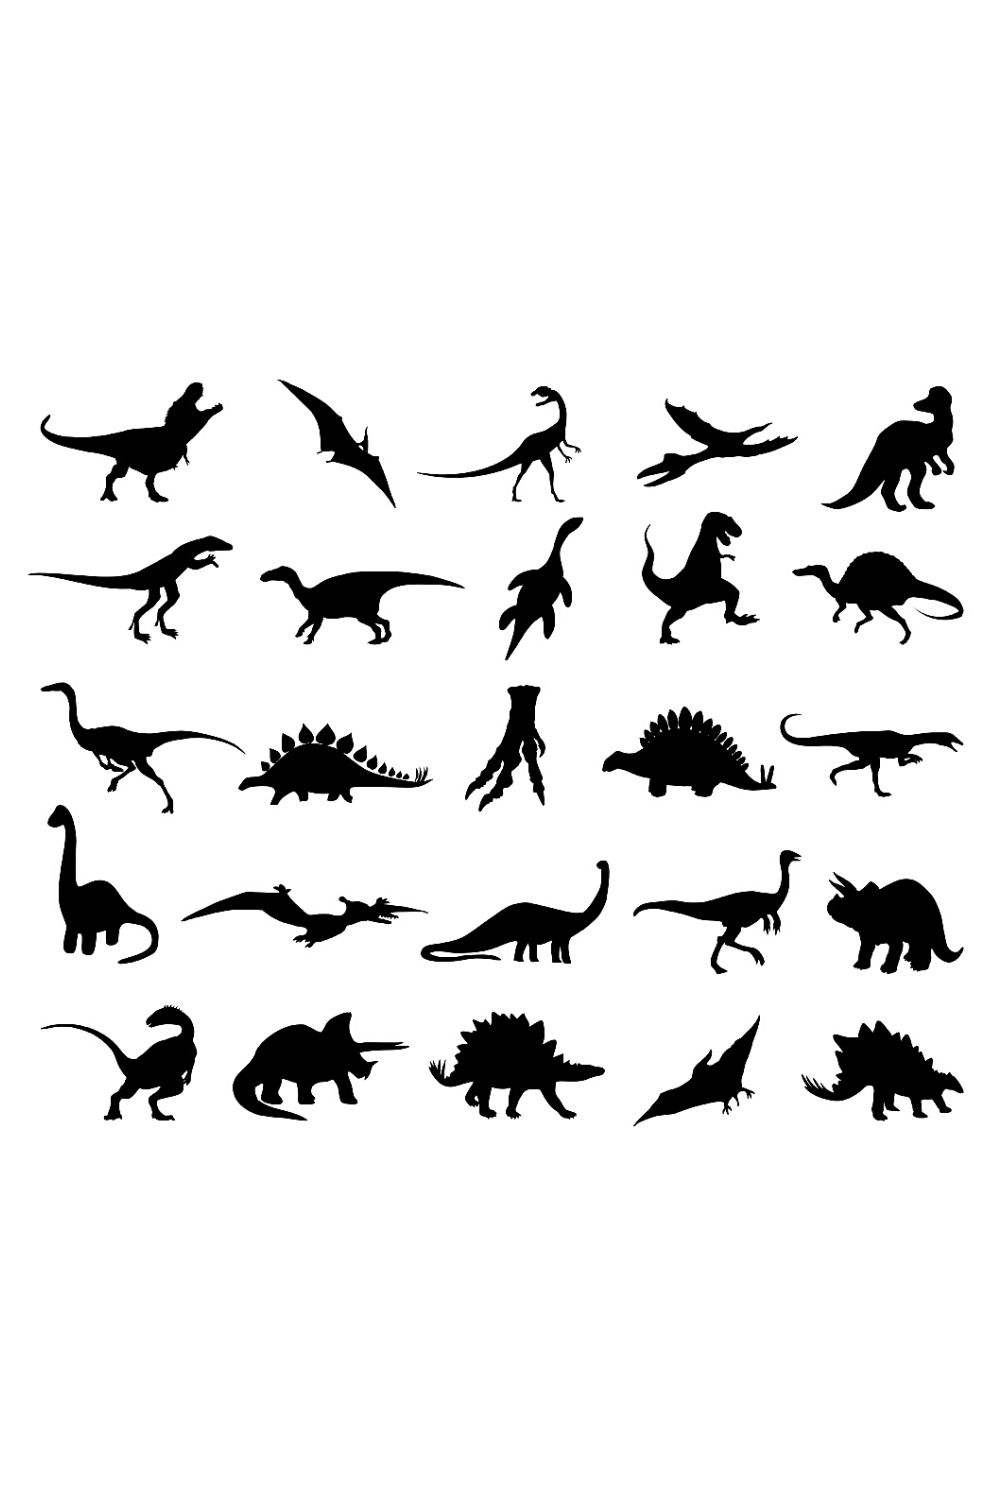 Dinosaur Silhouette Bundle Pinterest image.